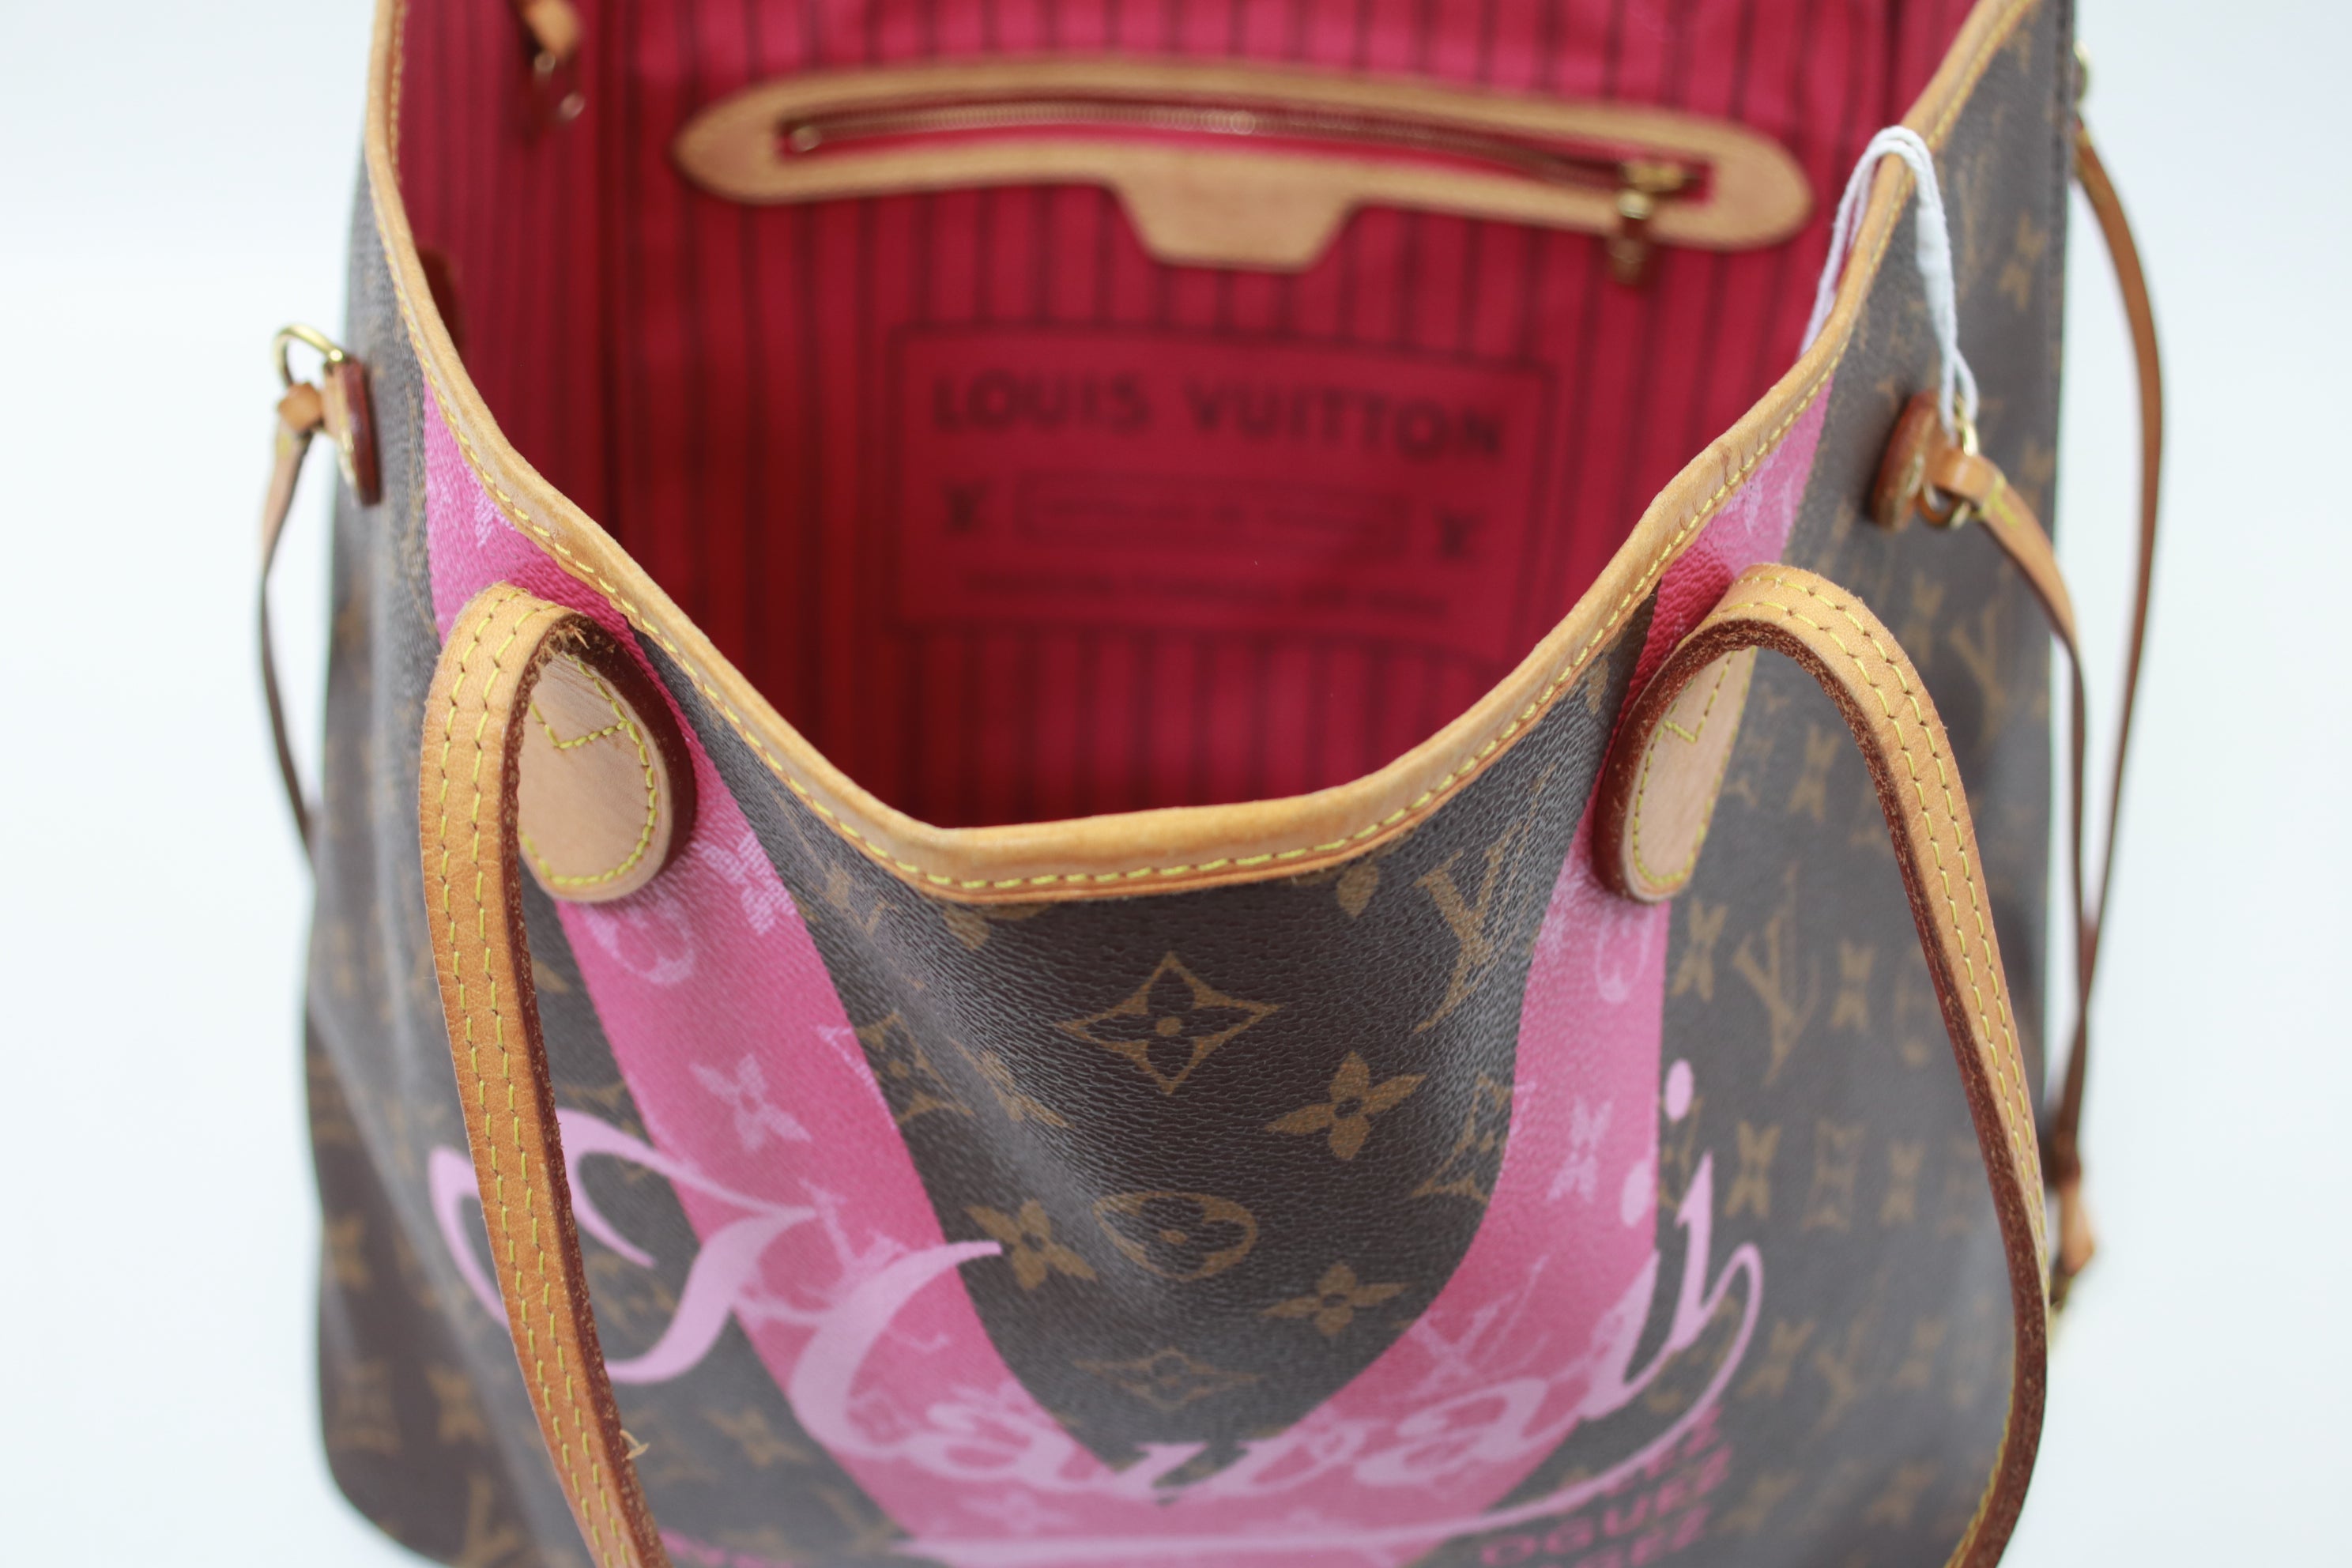 Louis Vuitton Hawaii Tote Bags